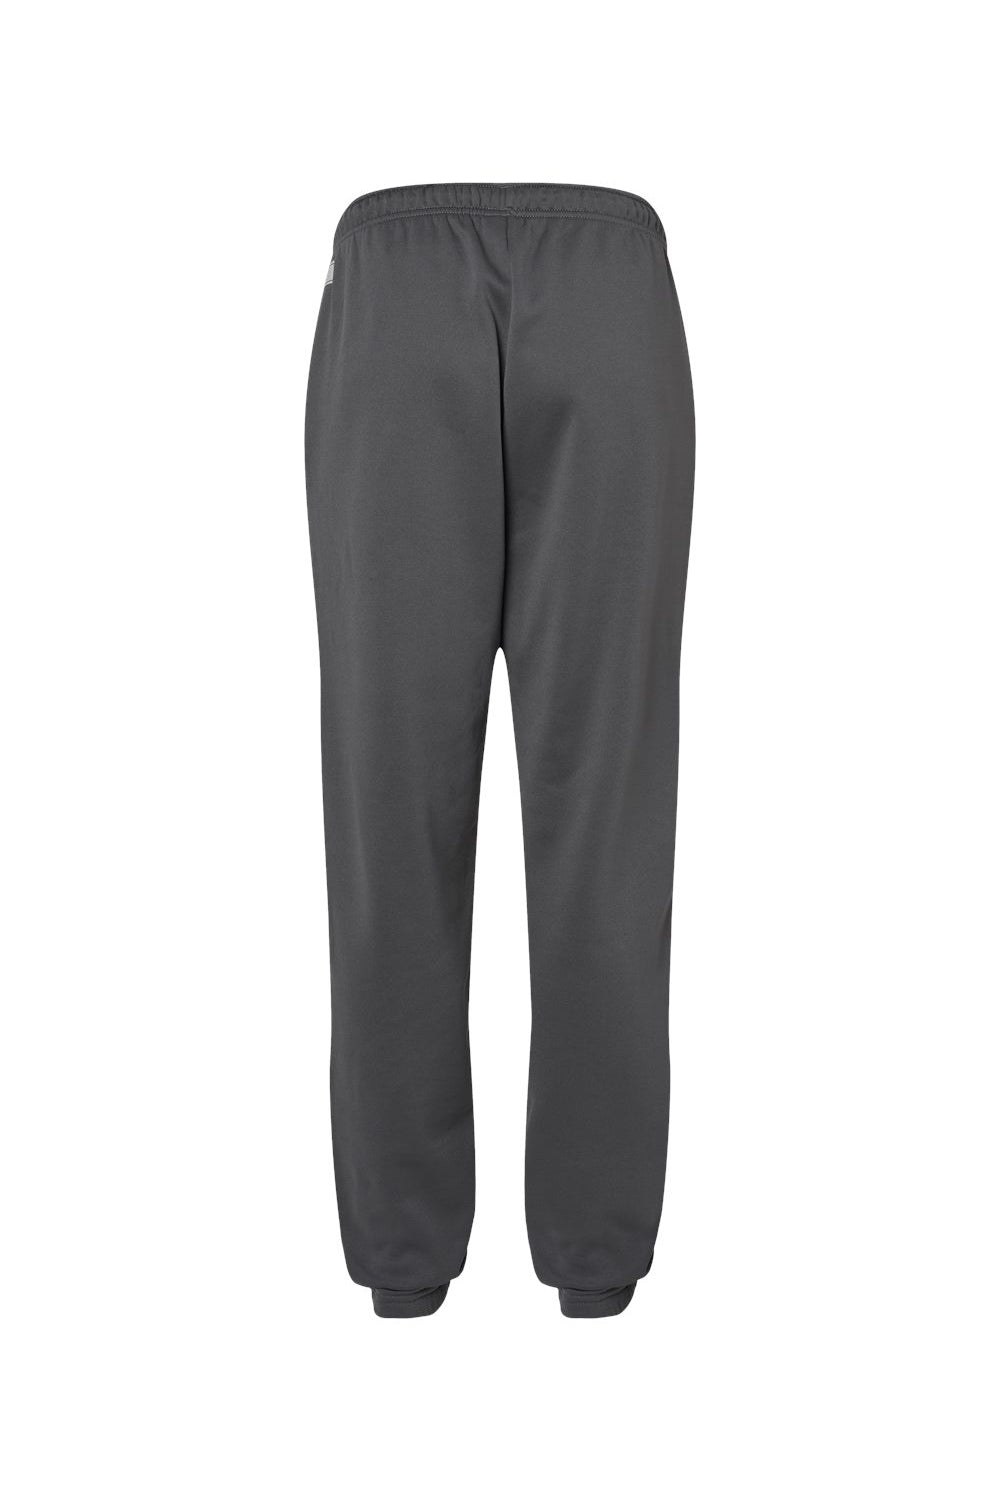 Oakley FOA402996 Mens Team Issue Enduro Hydrolix Sweatpants w/ Pockets Forged Iron Grey Flat Back